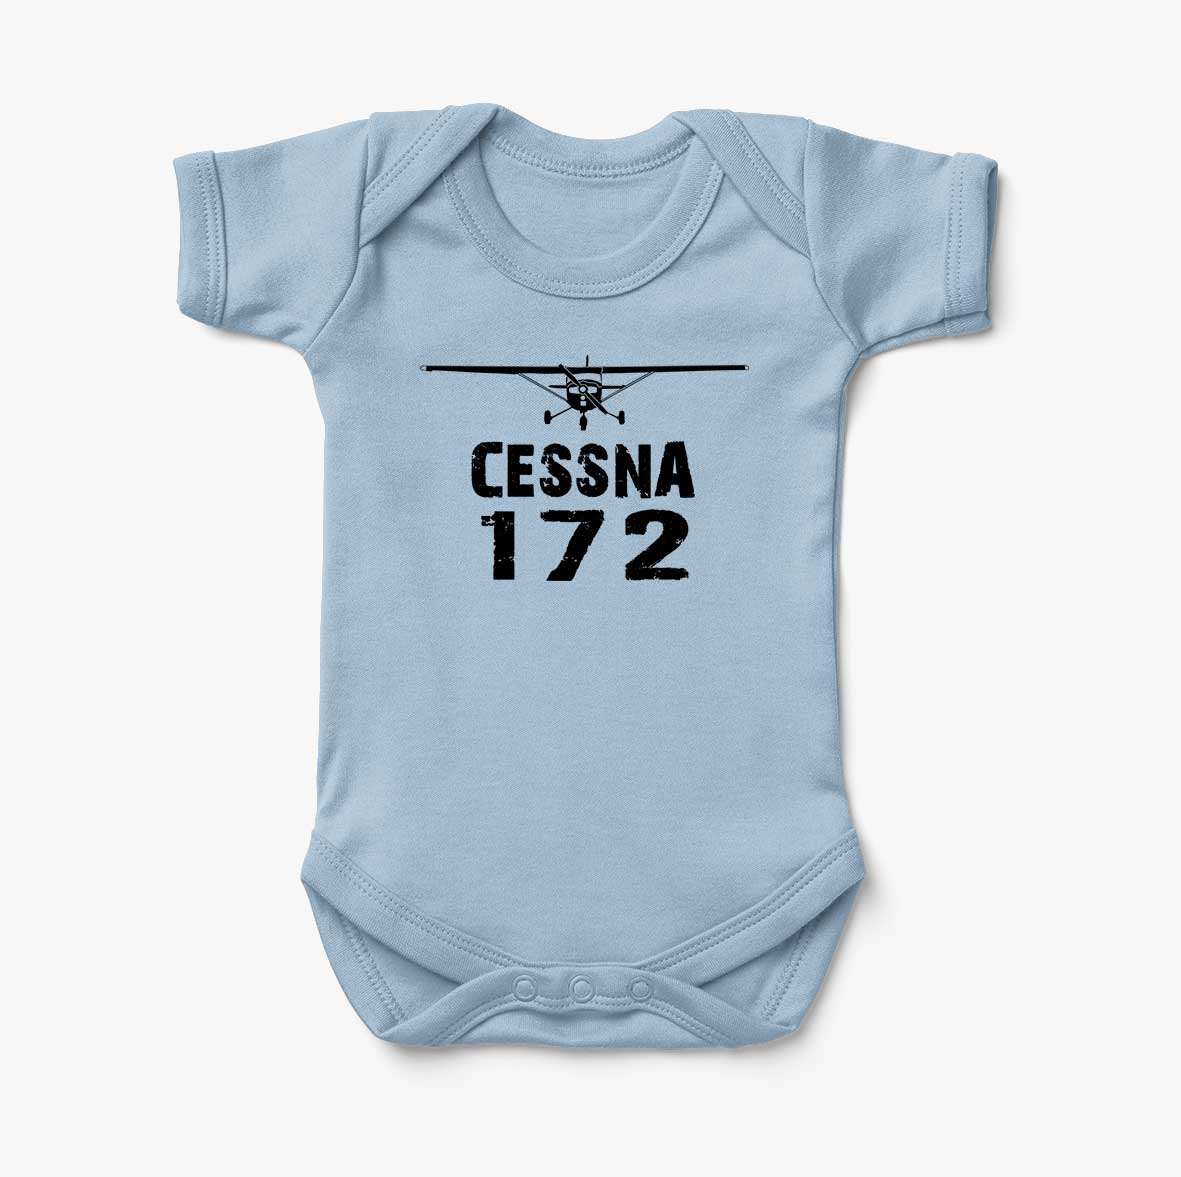 Cessna 172 & Plane Designed Baby Bodysuits